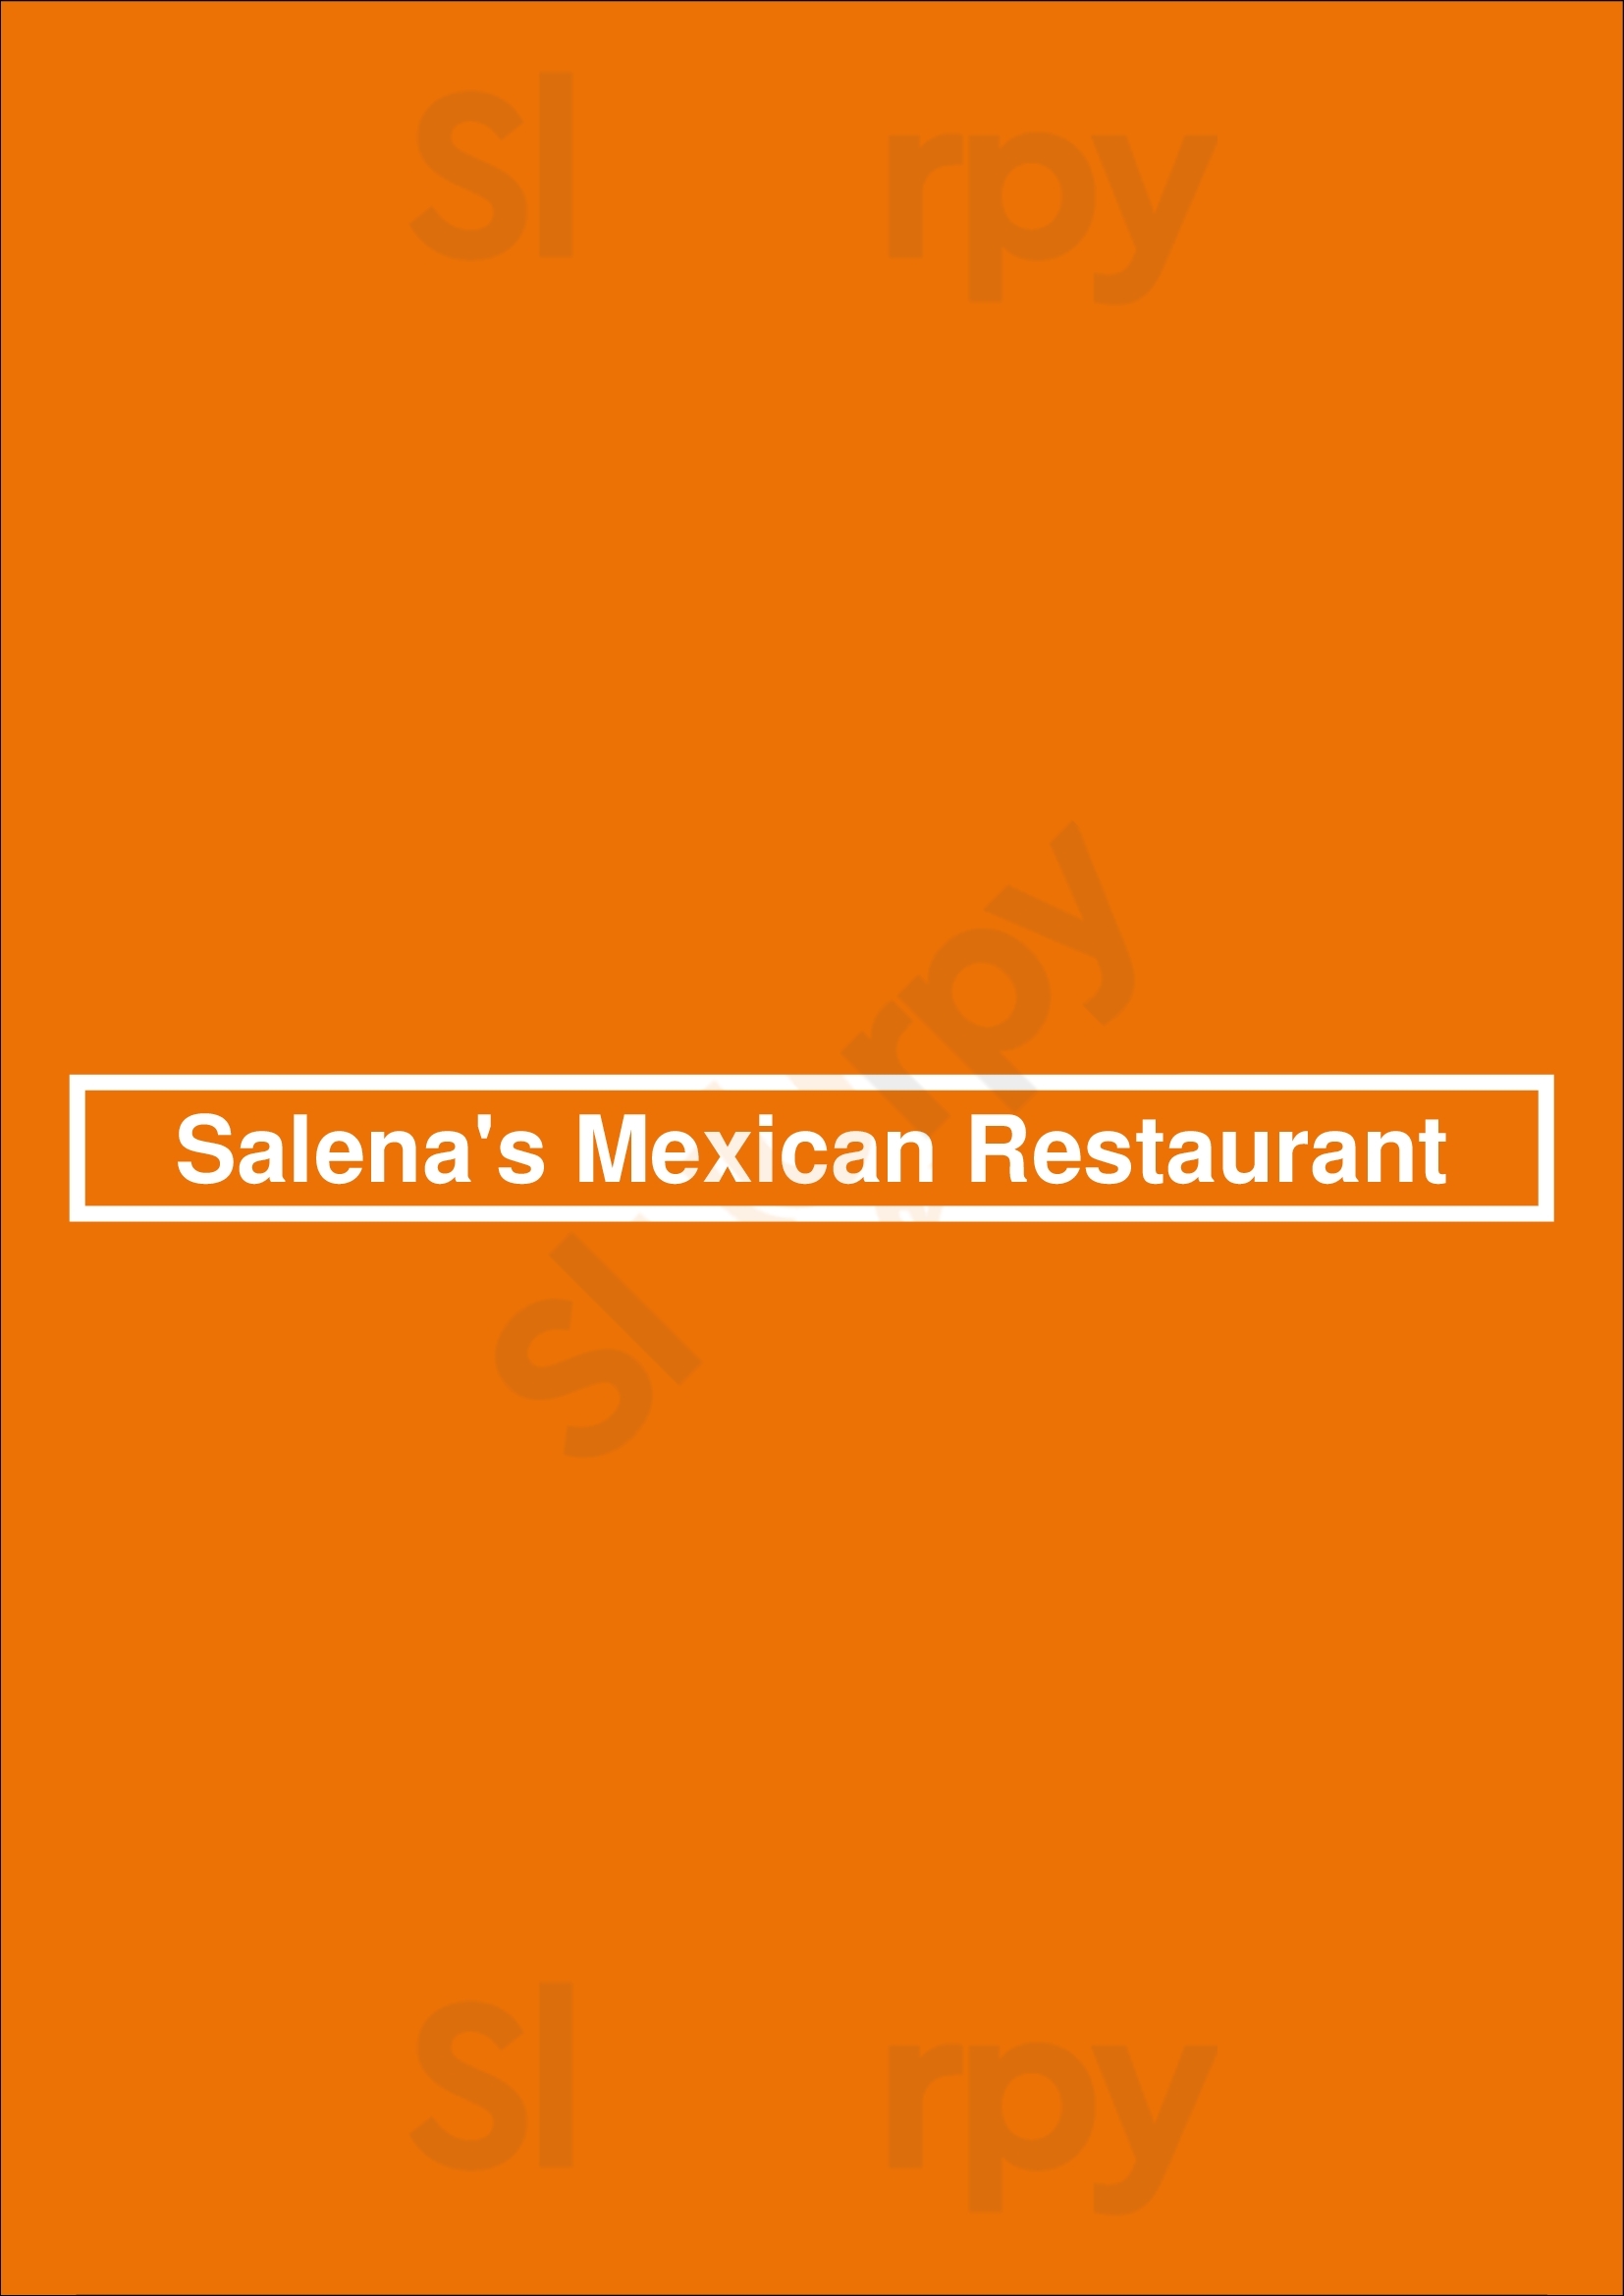 Salena's Mexican Restaurant Rochester Menu - 1